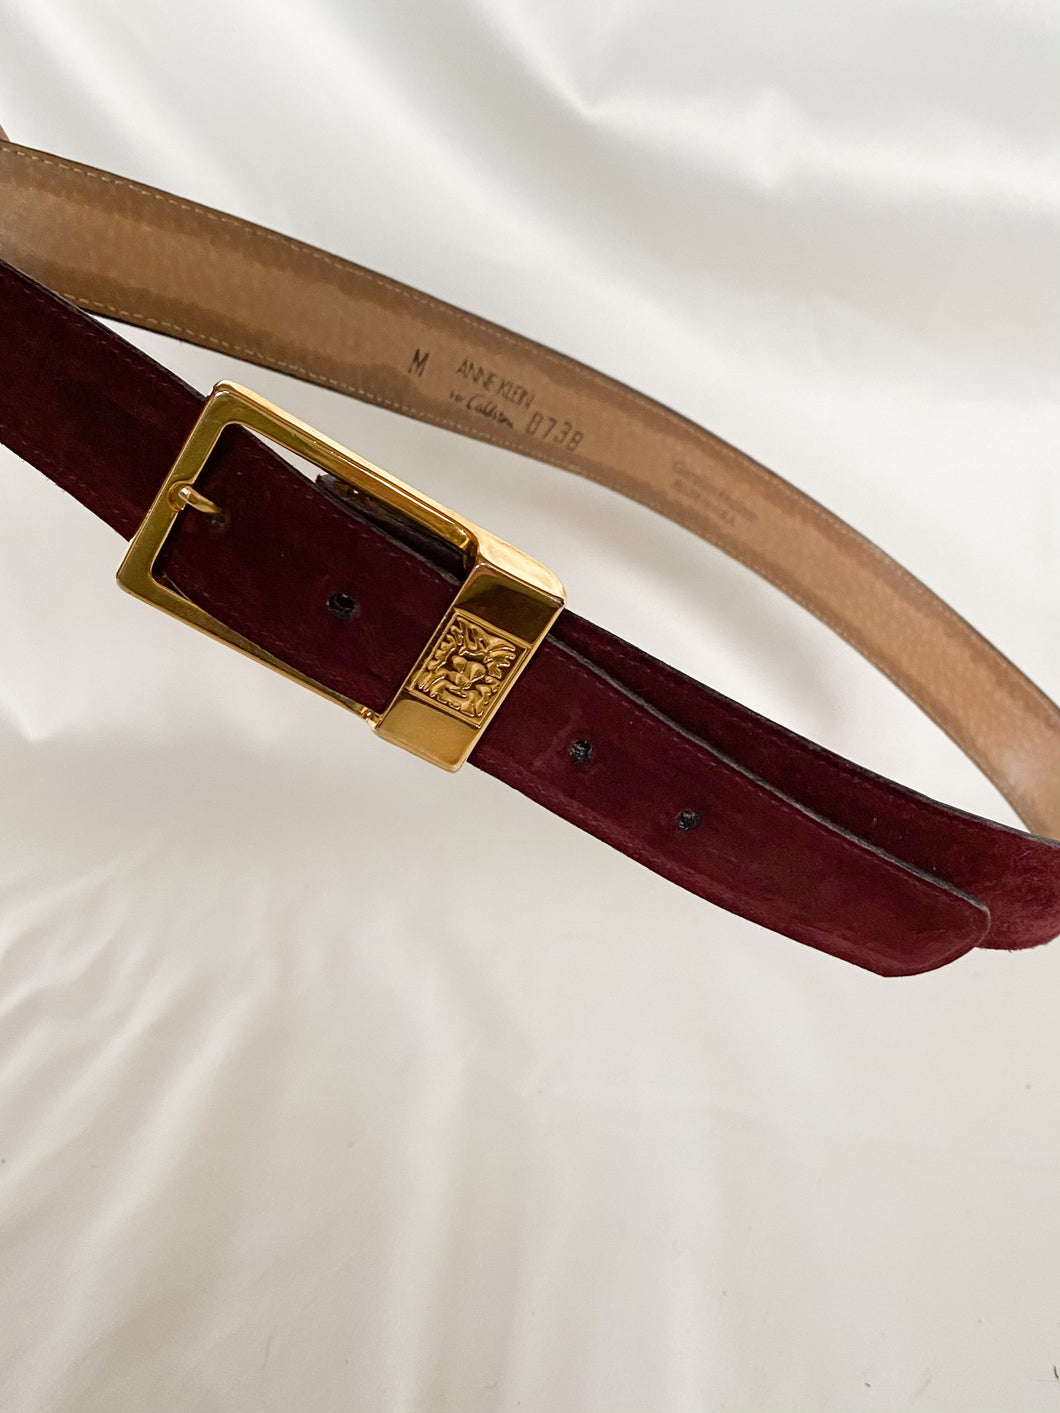 Burgundy Sueded Leather Belt (28”-31”)